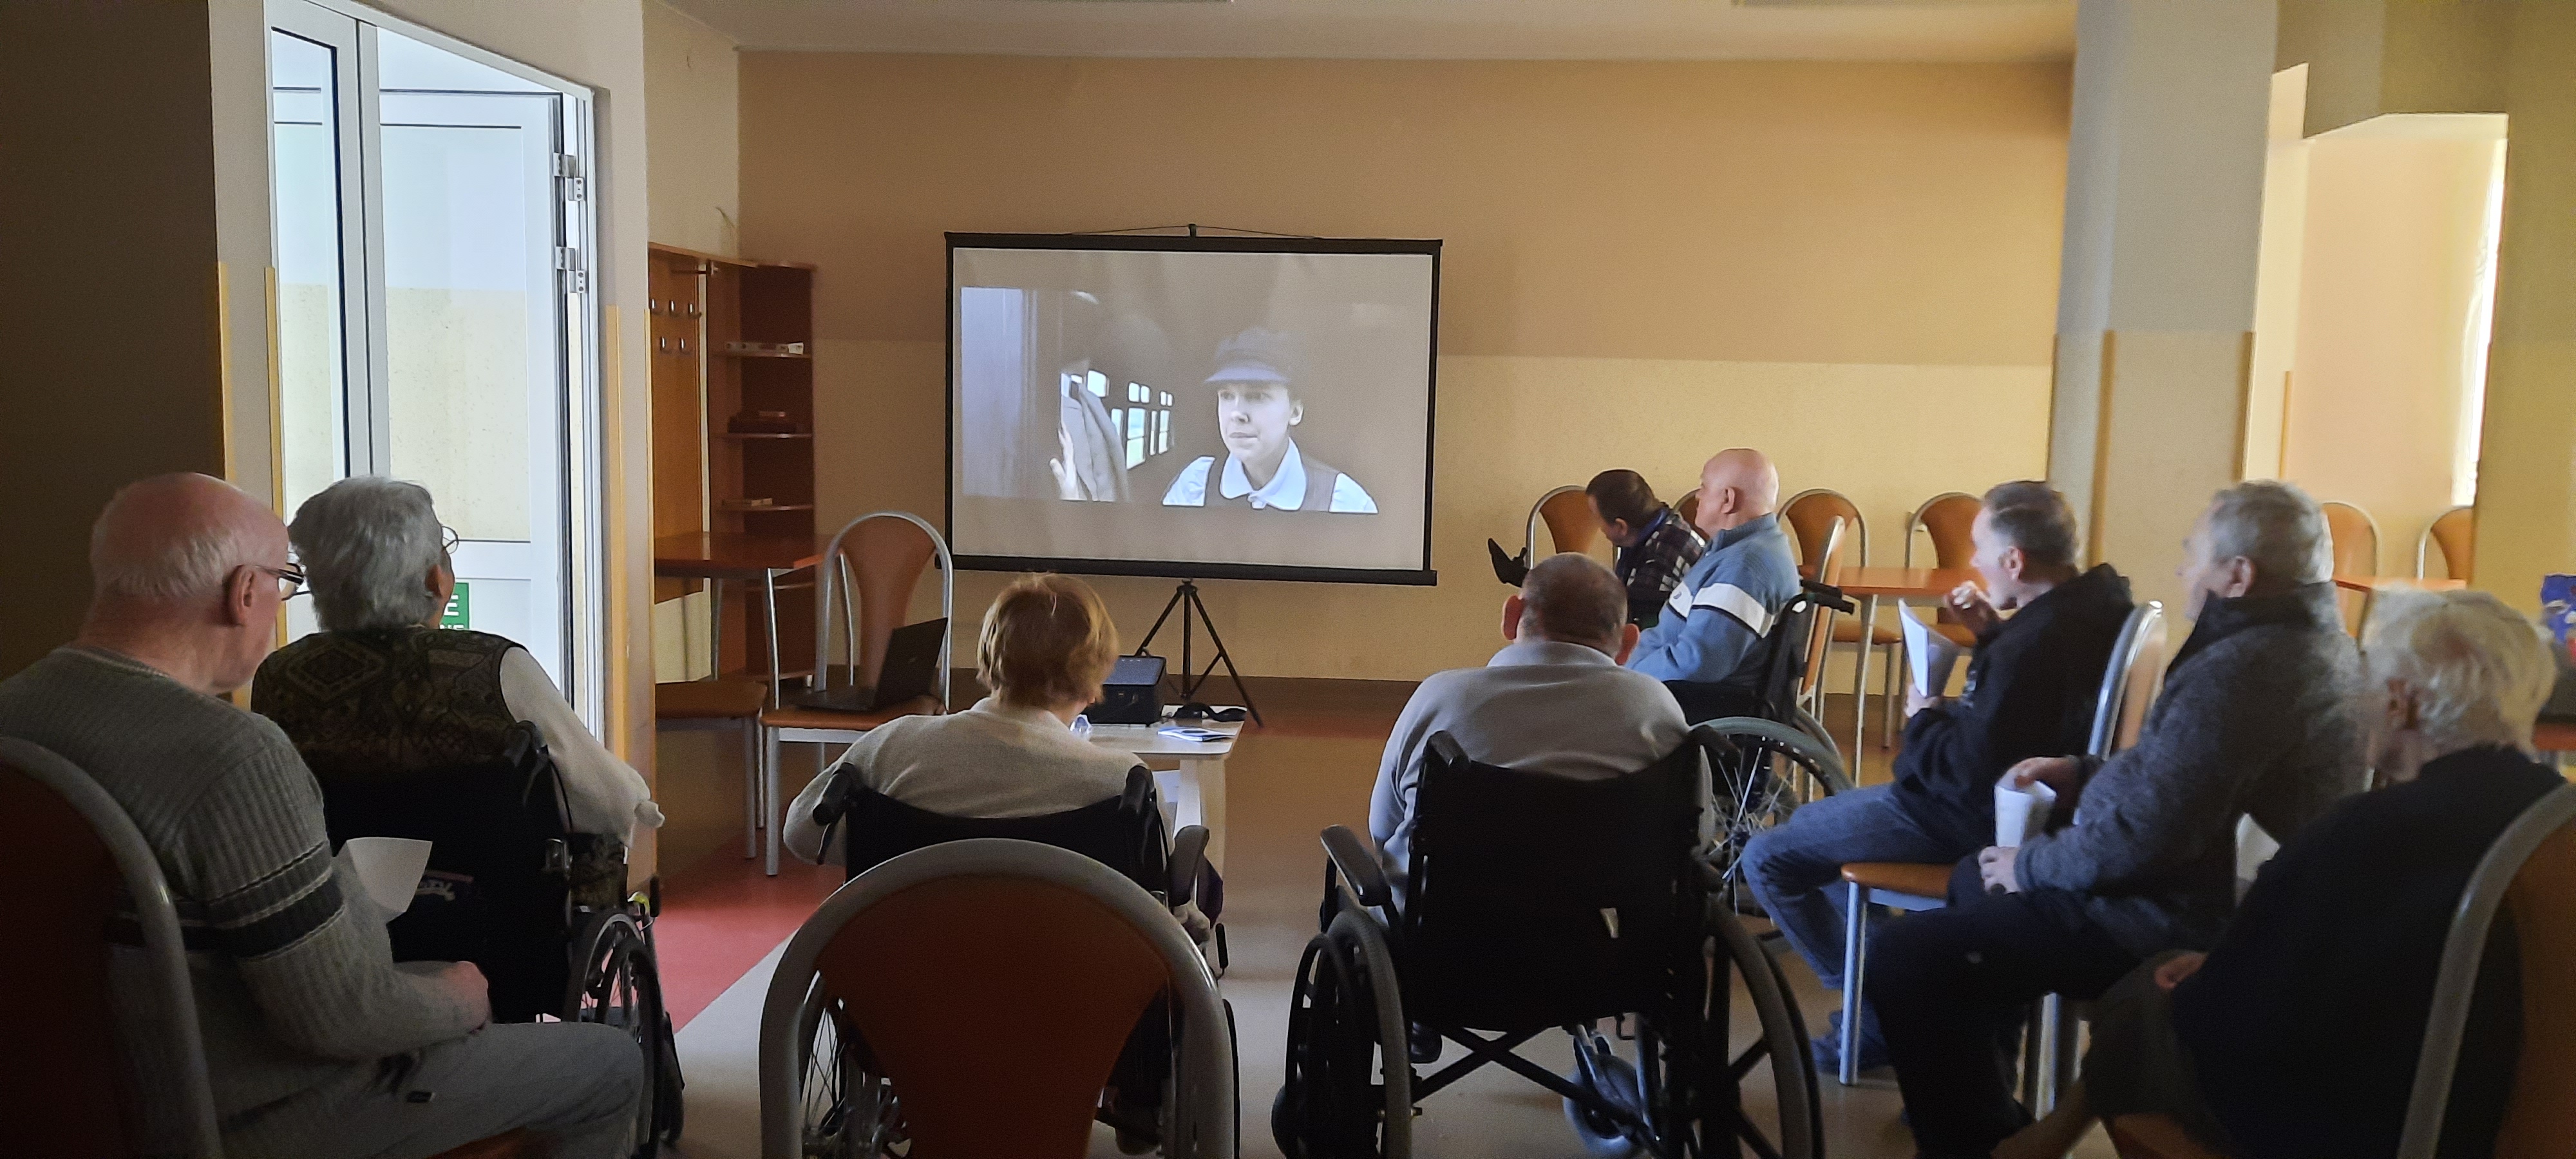 Grupa Seniorów ogląda film Enola Holmes